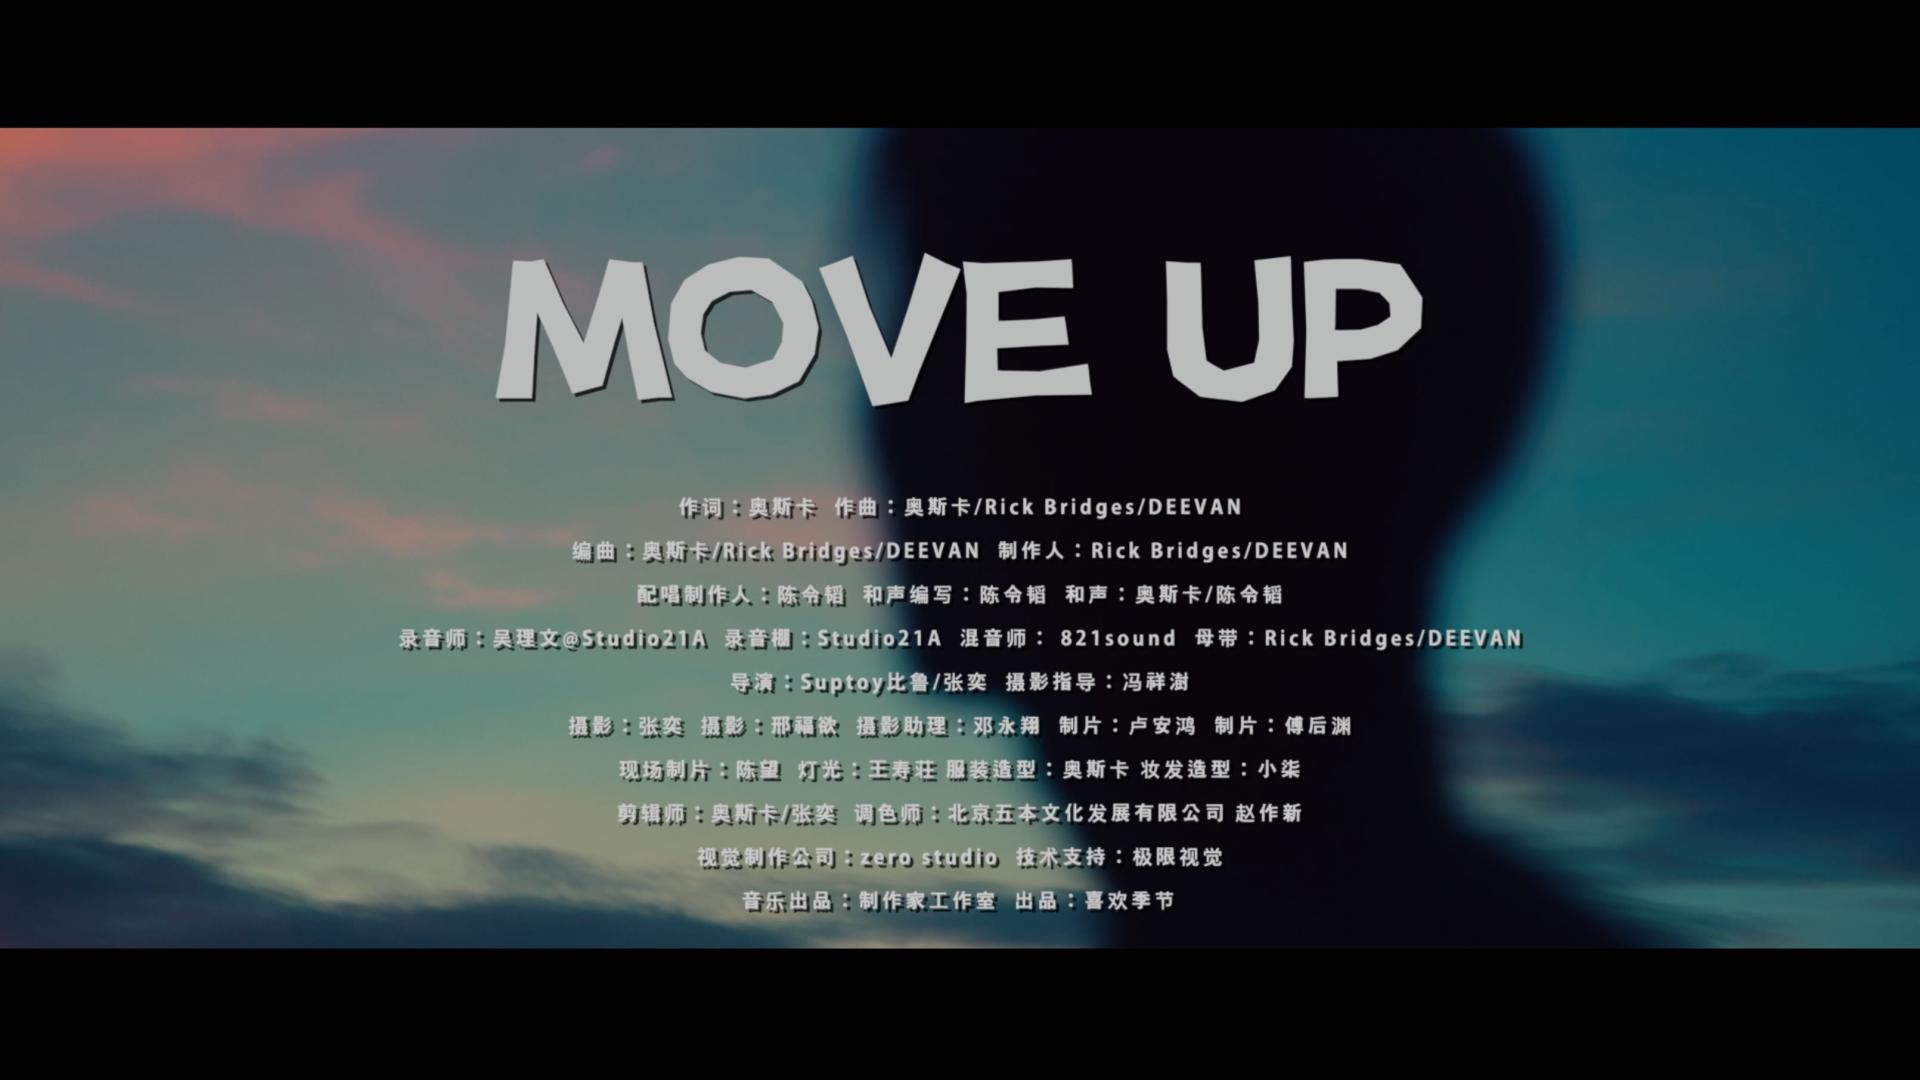 奥斯卡Oscar - MOVE UP / MUSIC VIDEO